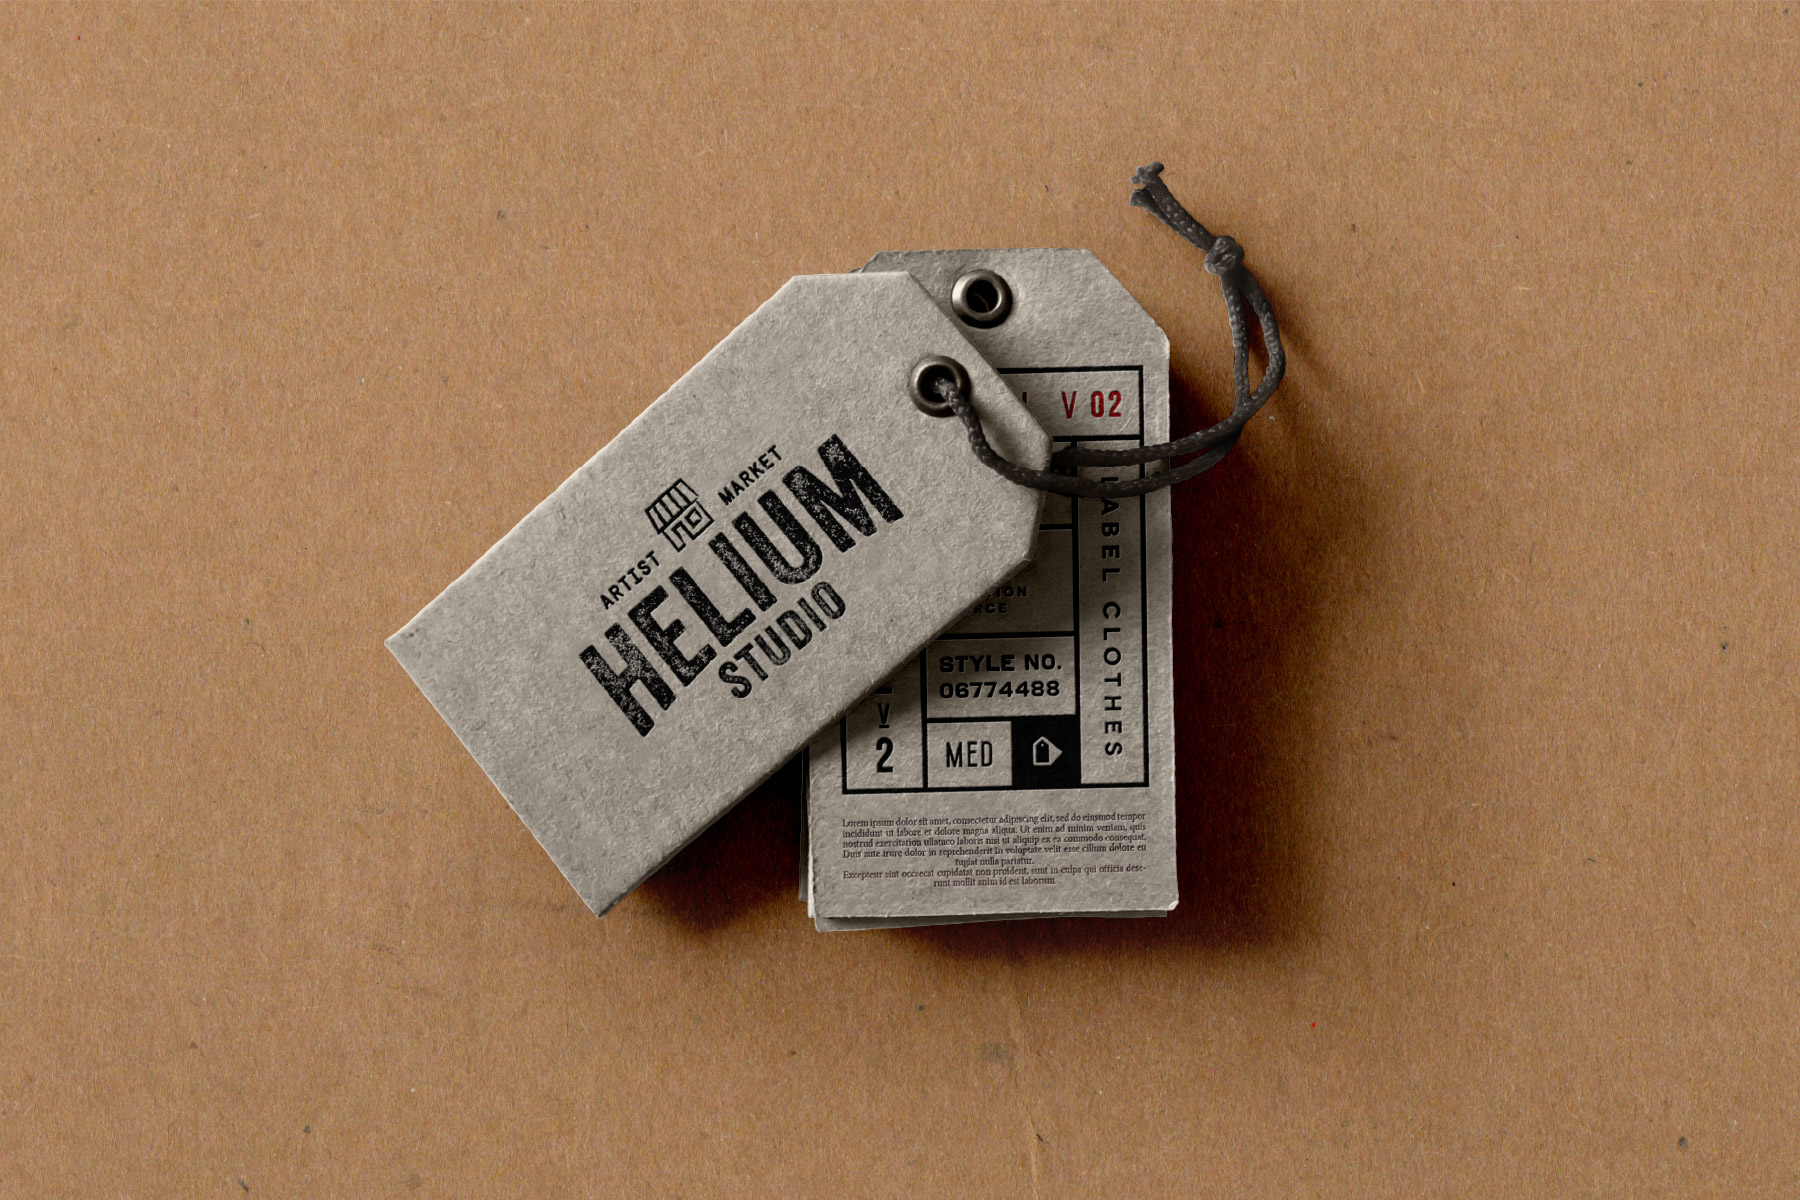 Helium Studio handtag labels